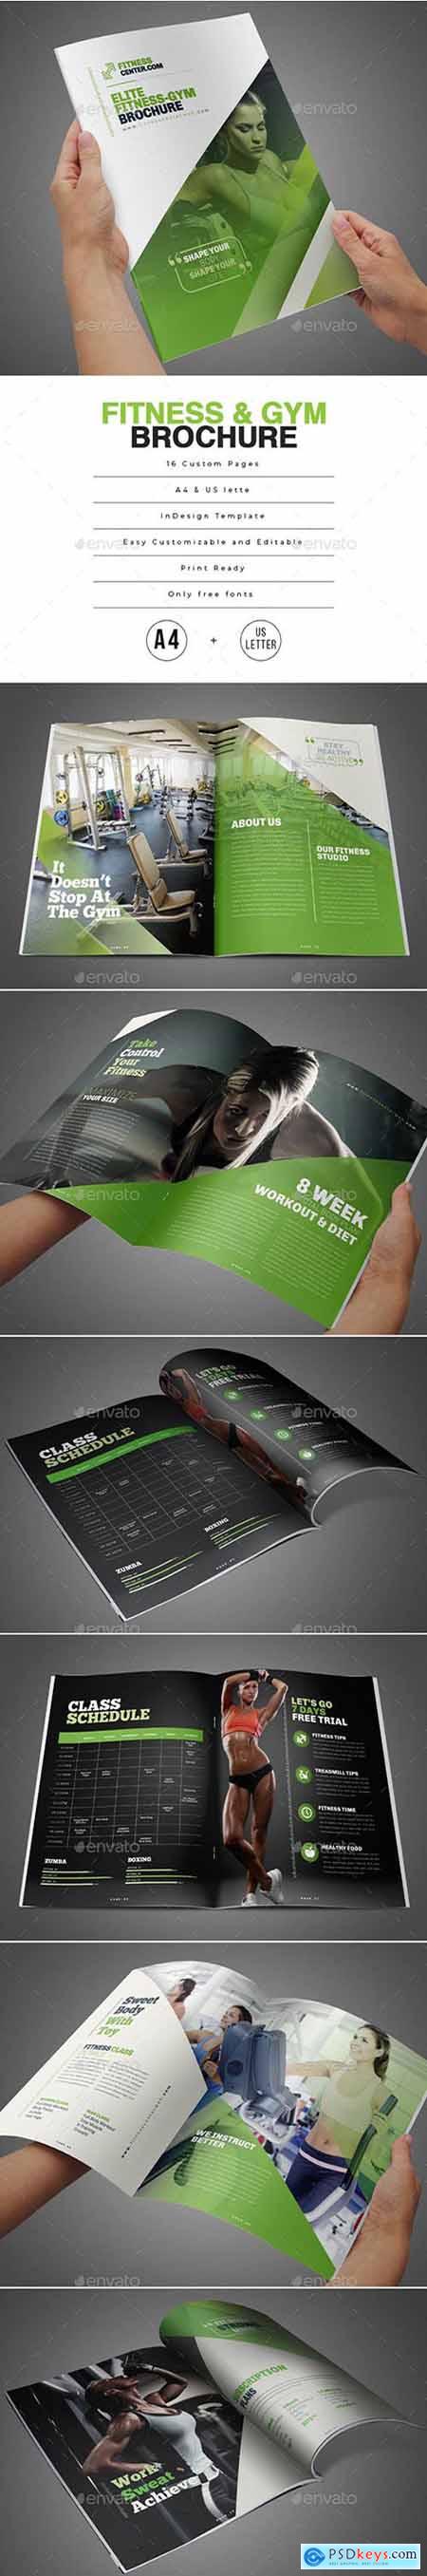 Graphicriver Fitness & Gym Brochure